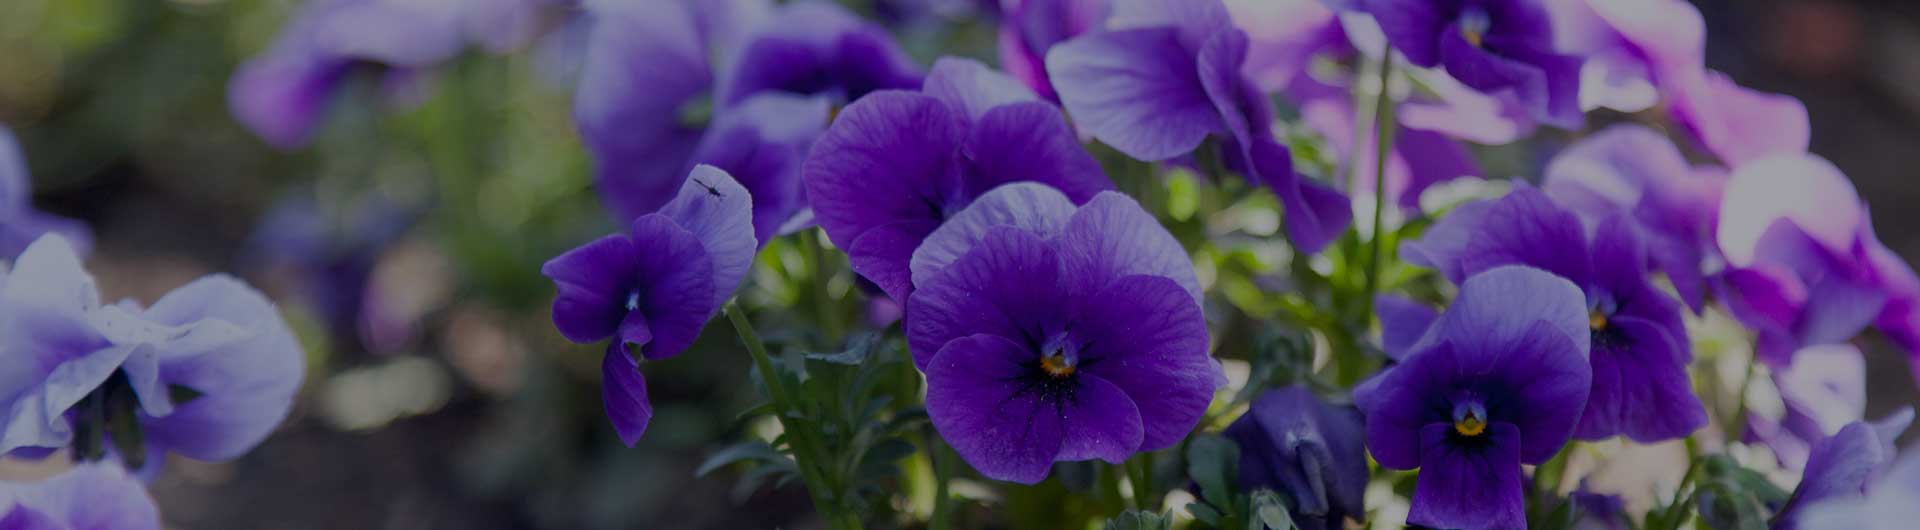 Violet flowers, Illinois' state flower.